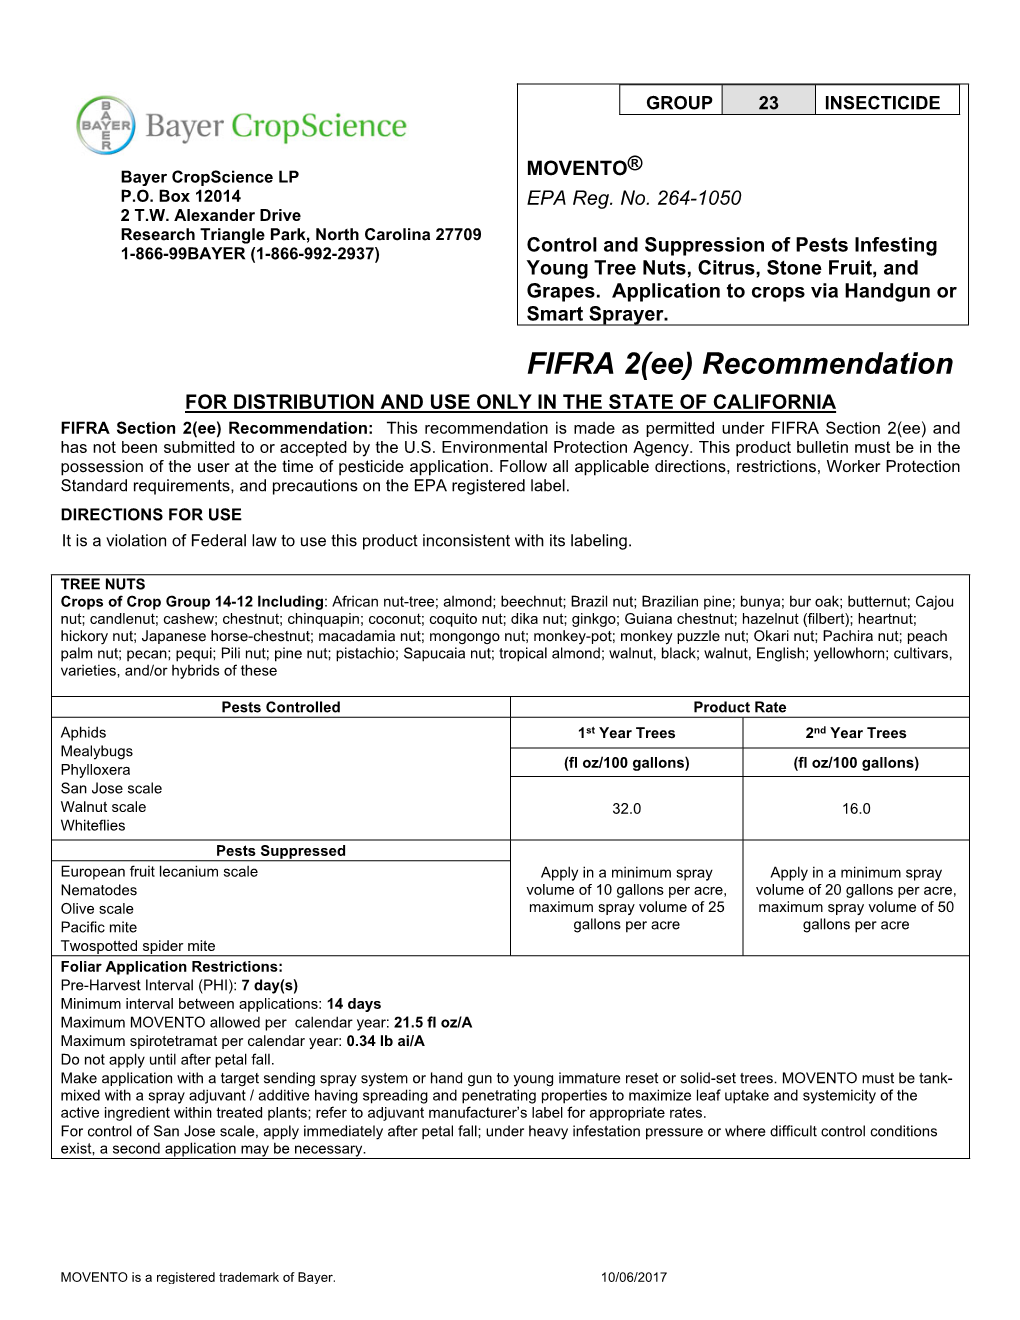 FIFRA 2(Ee) Recommendation